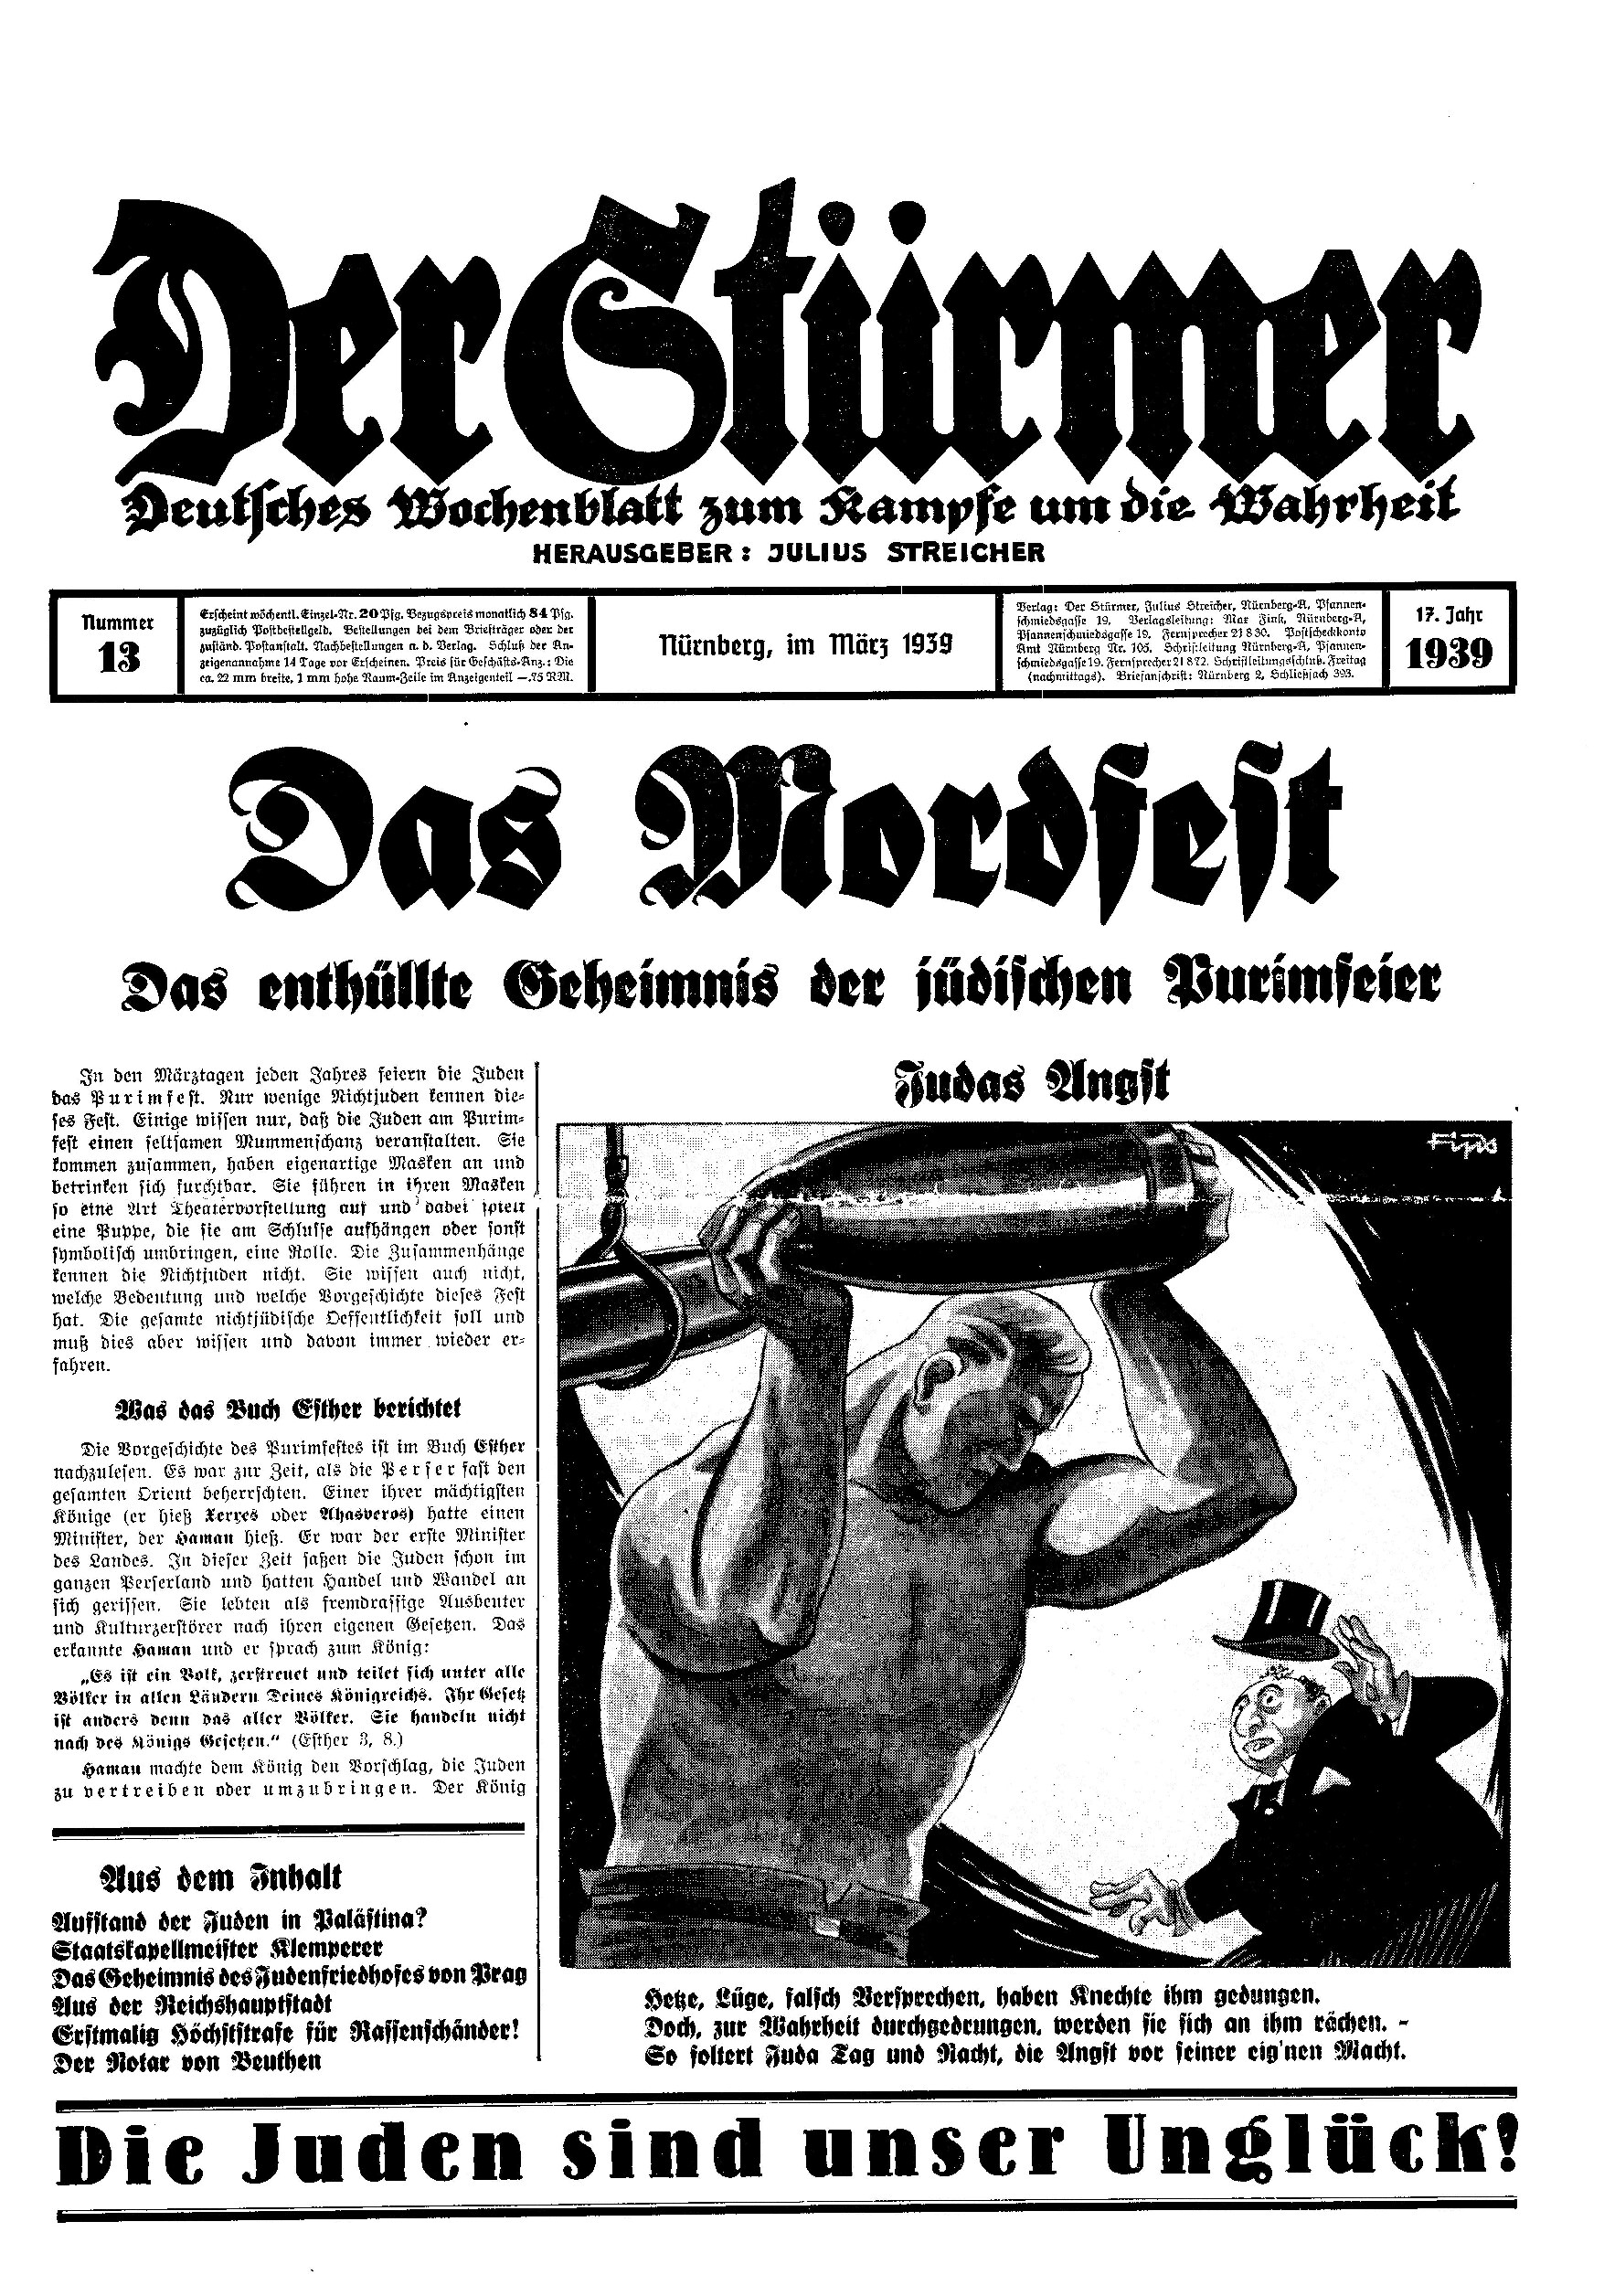 Der Stürmer - 1939 Nr. 13 - Das Mordfest